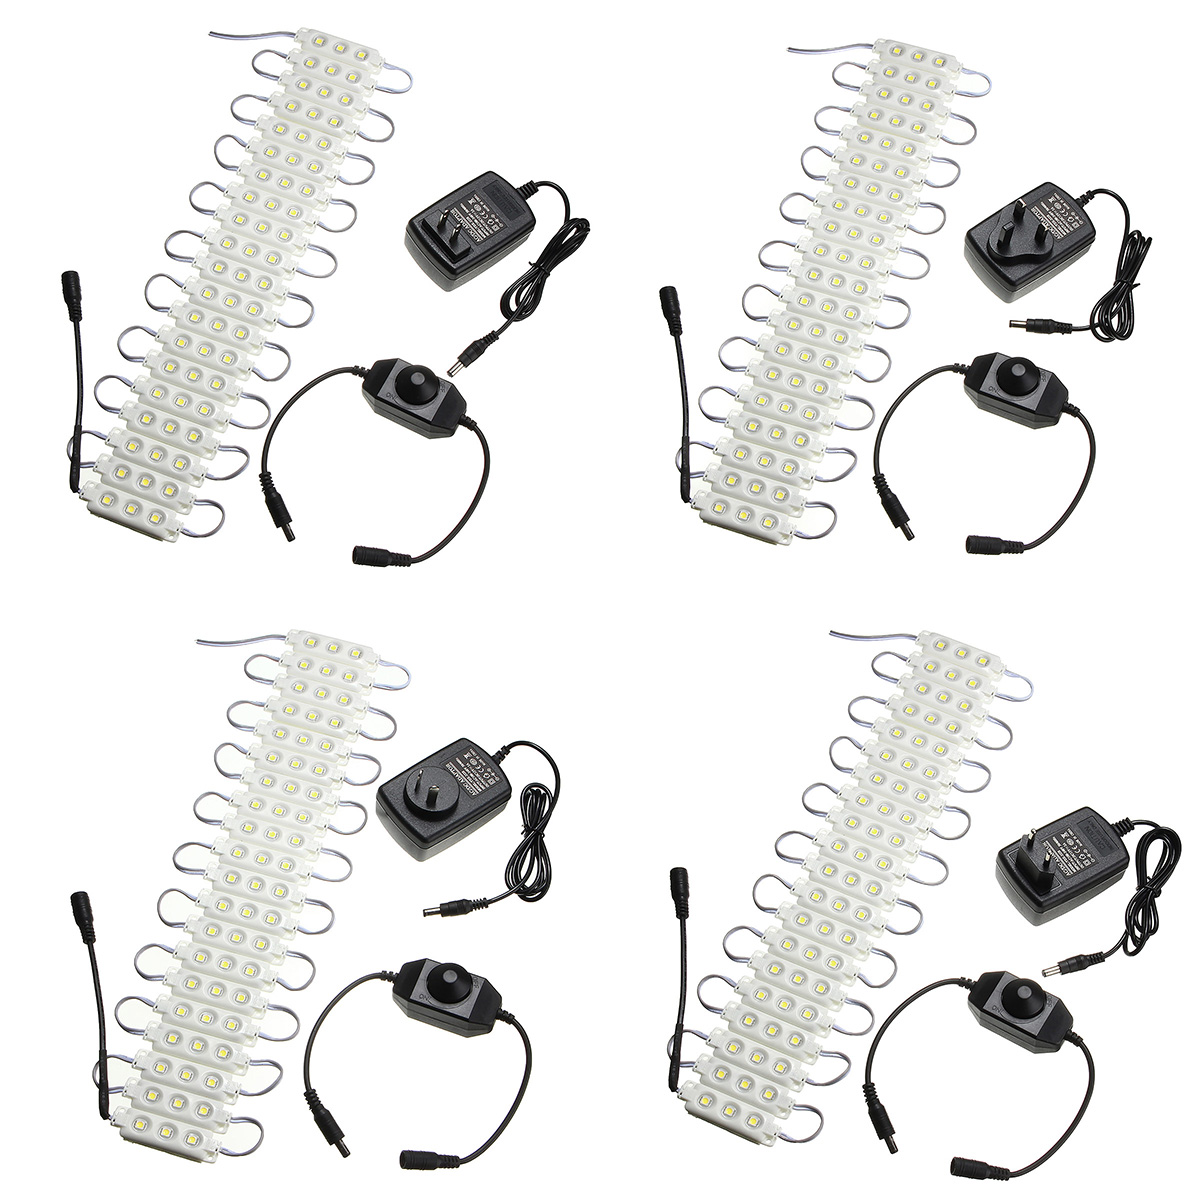 3M-SMD5050-Waterproof-White-LED-Module-Strip-Light-Kit-Mirror-Signage-Makeup-Lamp--Adapter-DC12V-1113098-1